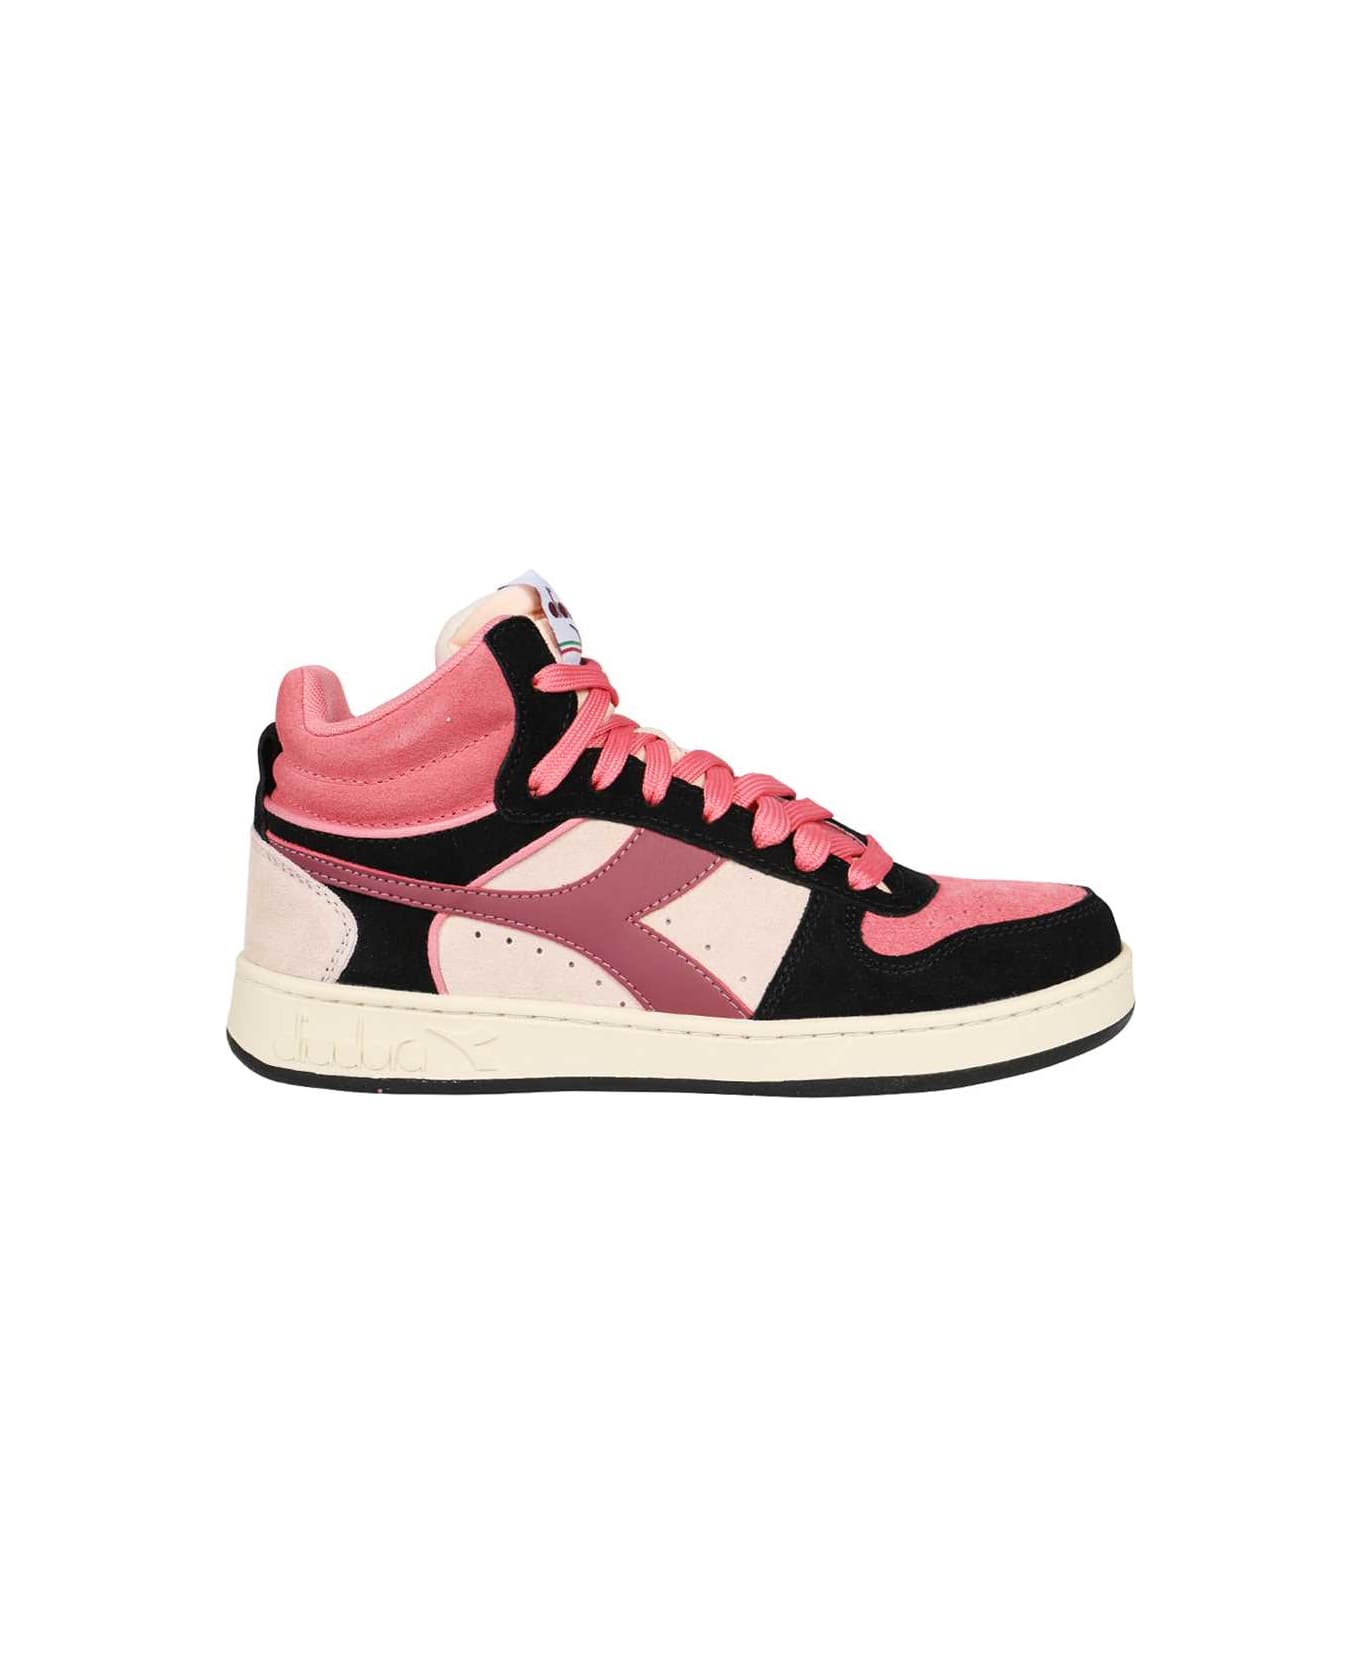 Diadora Suede High-top Sneakers - Pink